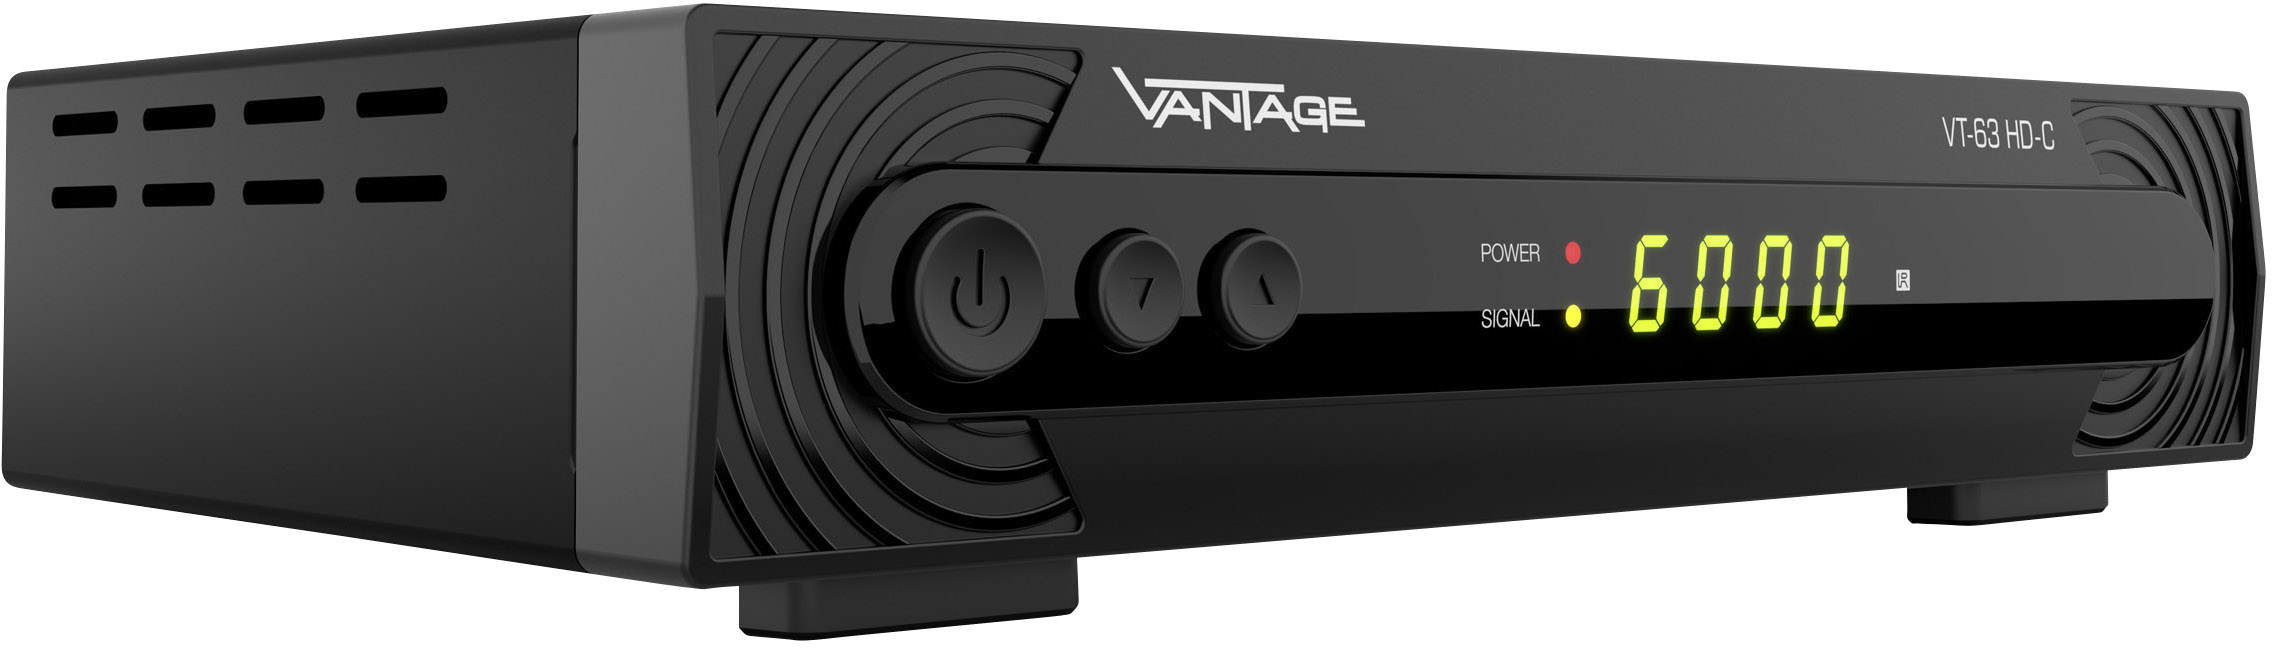 Vantage VT-63 HD-C HD-Kabel-Receiver Anzahl Tuner: 1